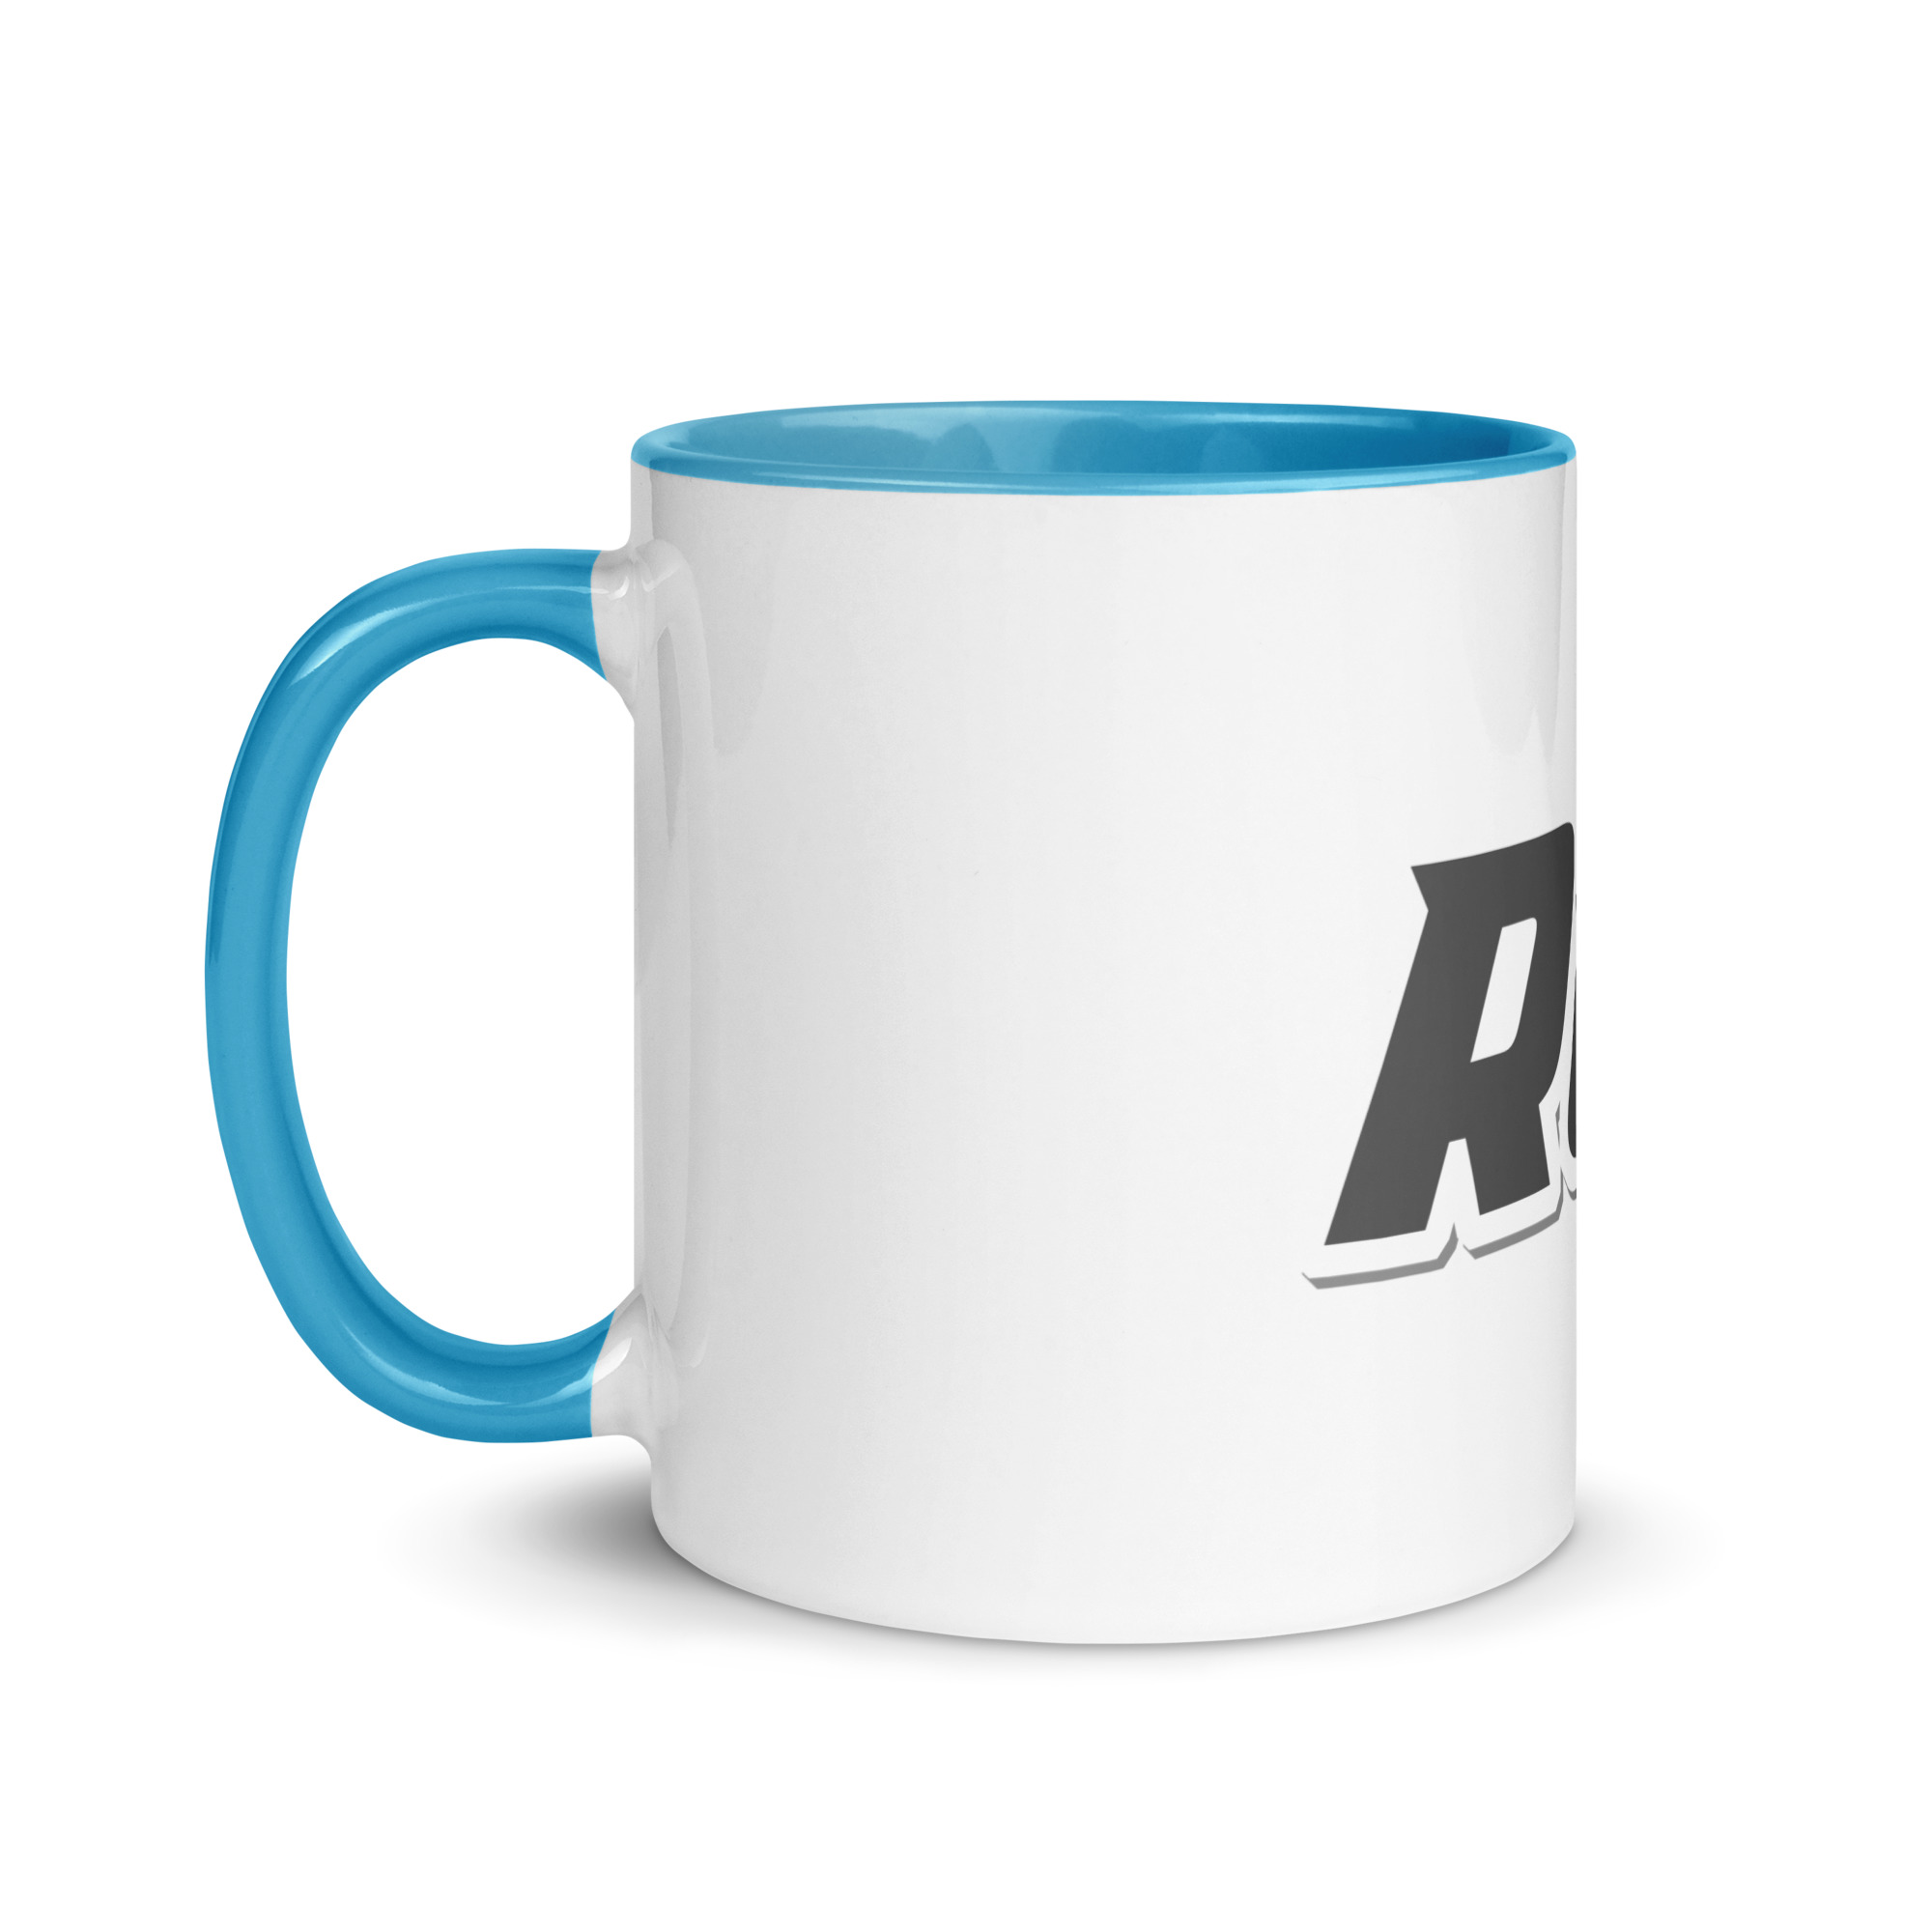 white-ceramic-mug-with-color-inside-blue-11-oz-left-6525b6484b266.jpg